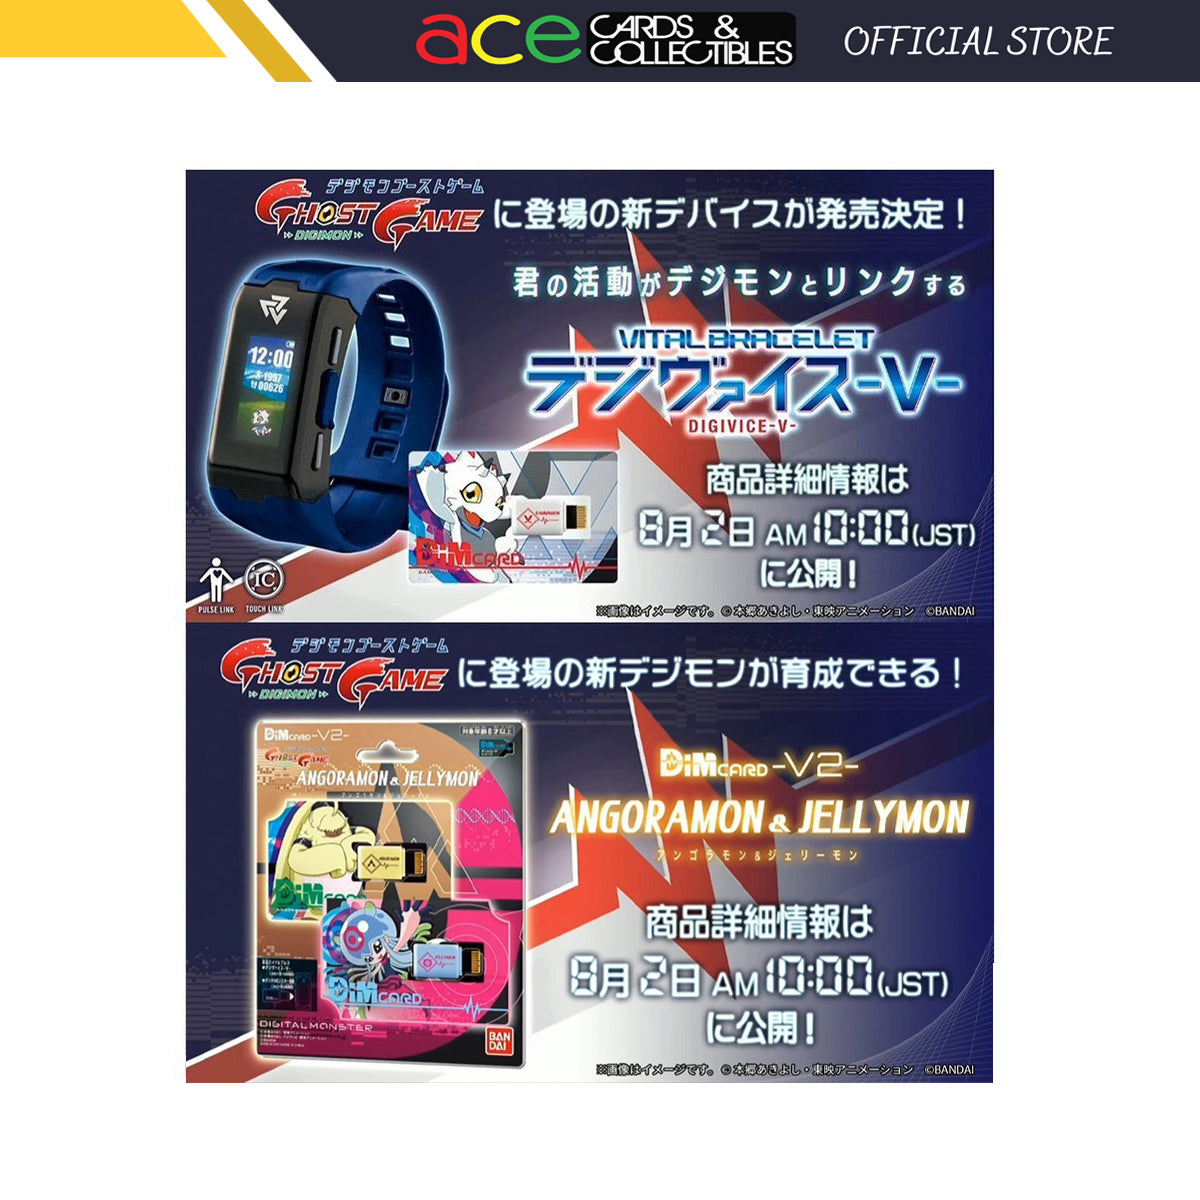 Digimon Ghost Game Vital Breath DigiVice V Bandai Japan